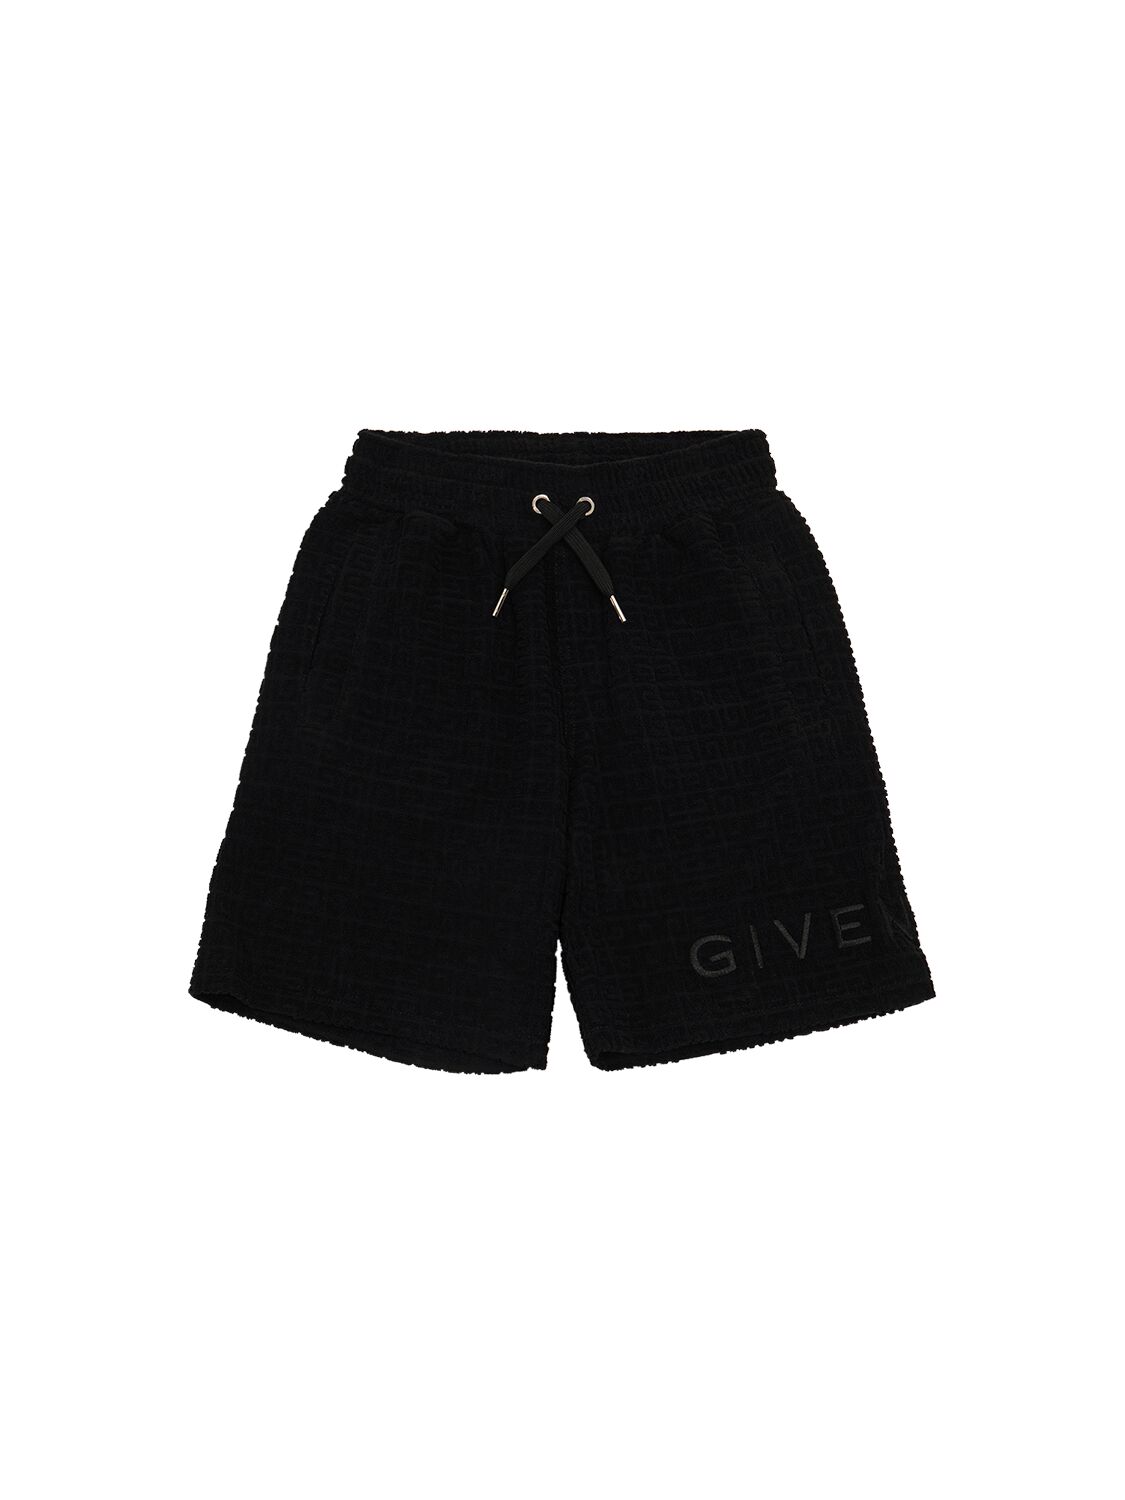 Givenchy 棉质毛巾布提花短裤 In Black